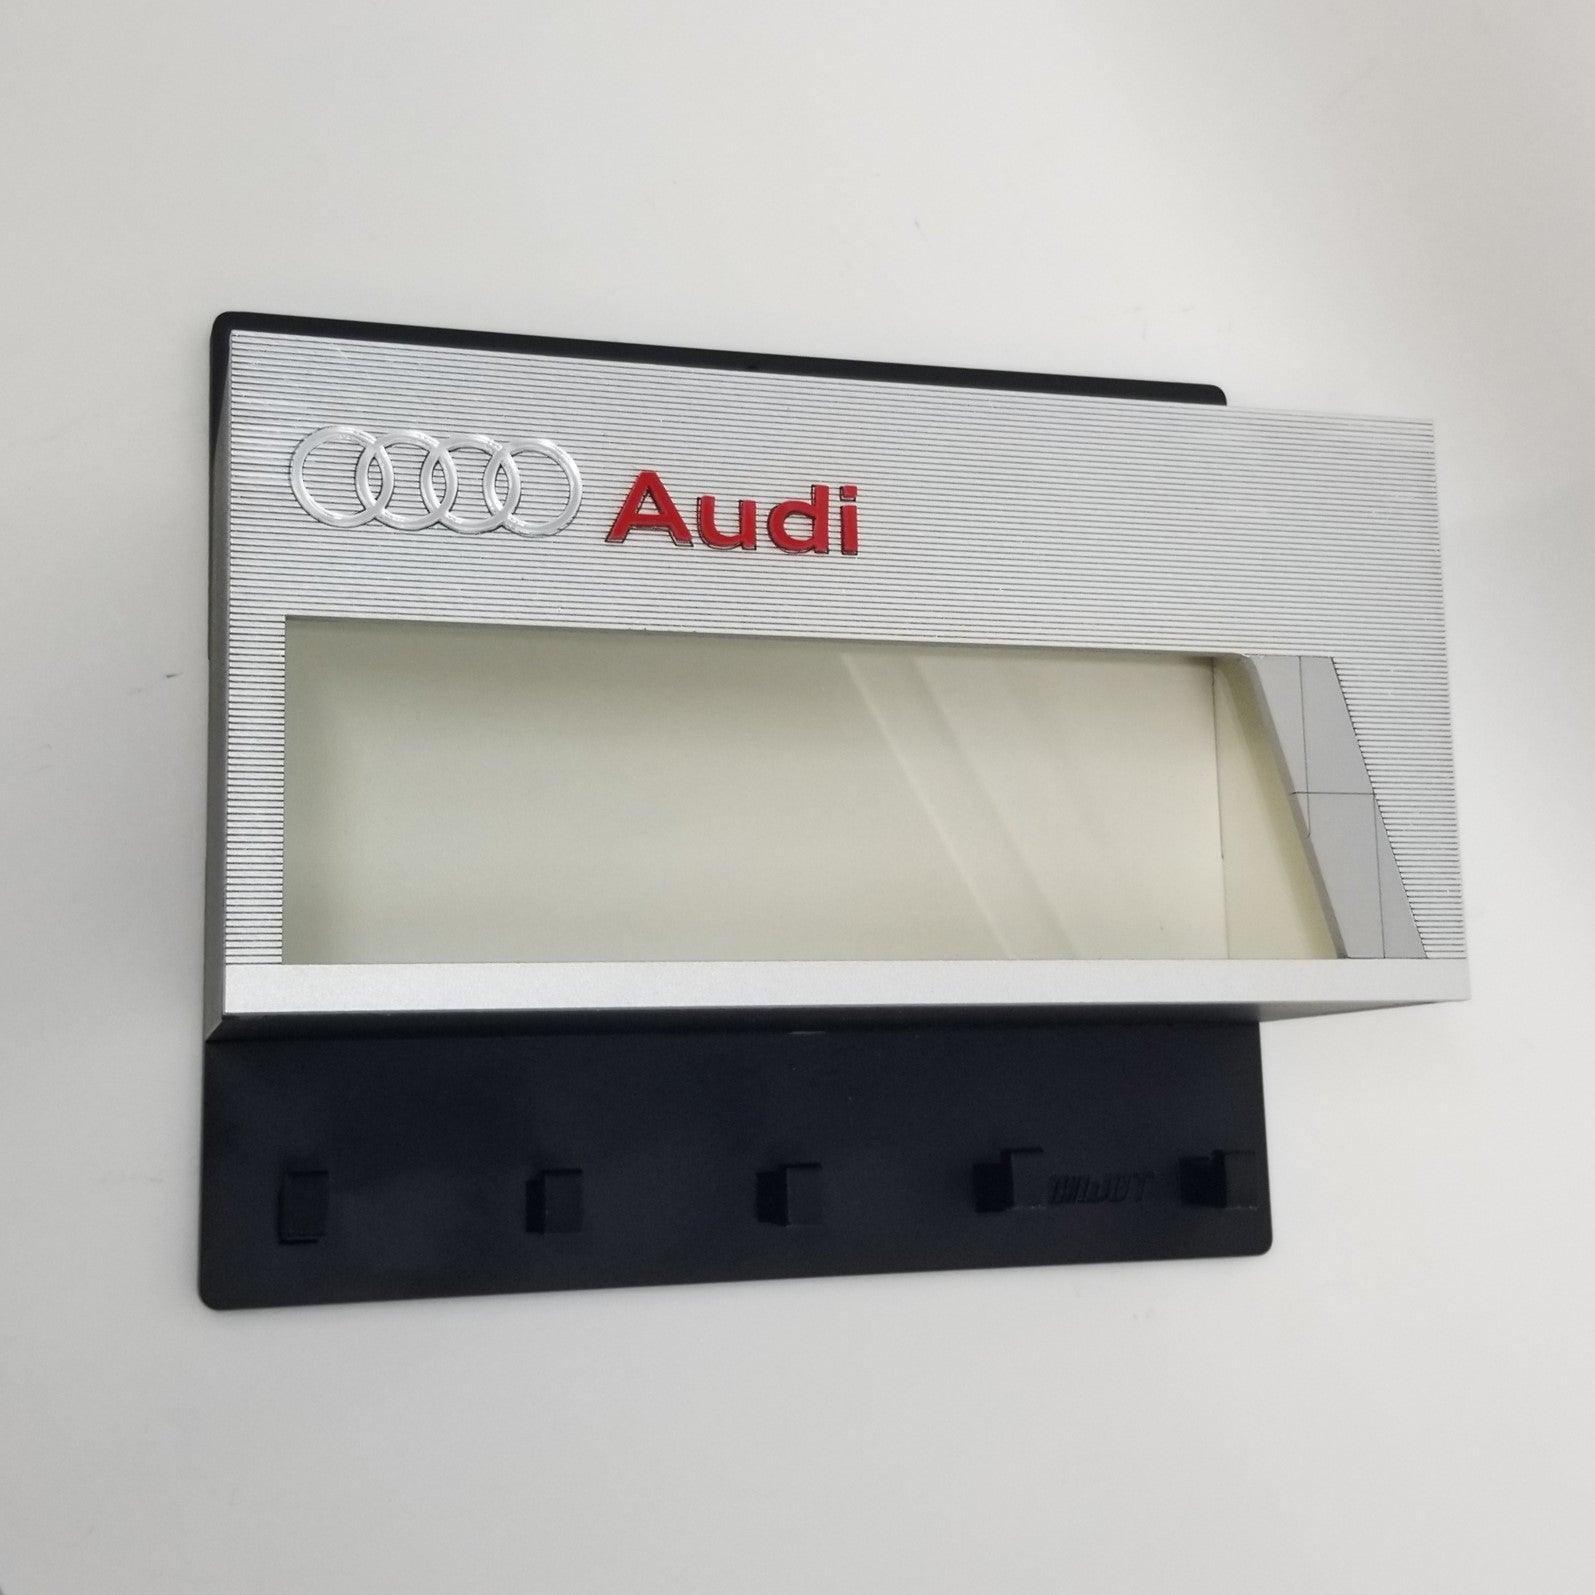 Audi Dealership Wall Key Hook Rack - Exclusive Item - Handcrafted Key Holder - Brazilian Shop